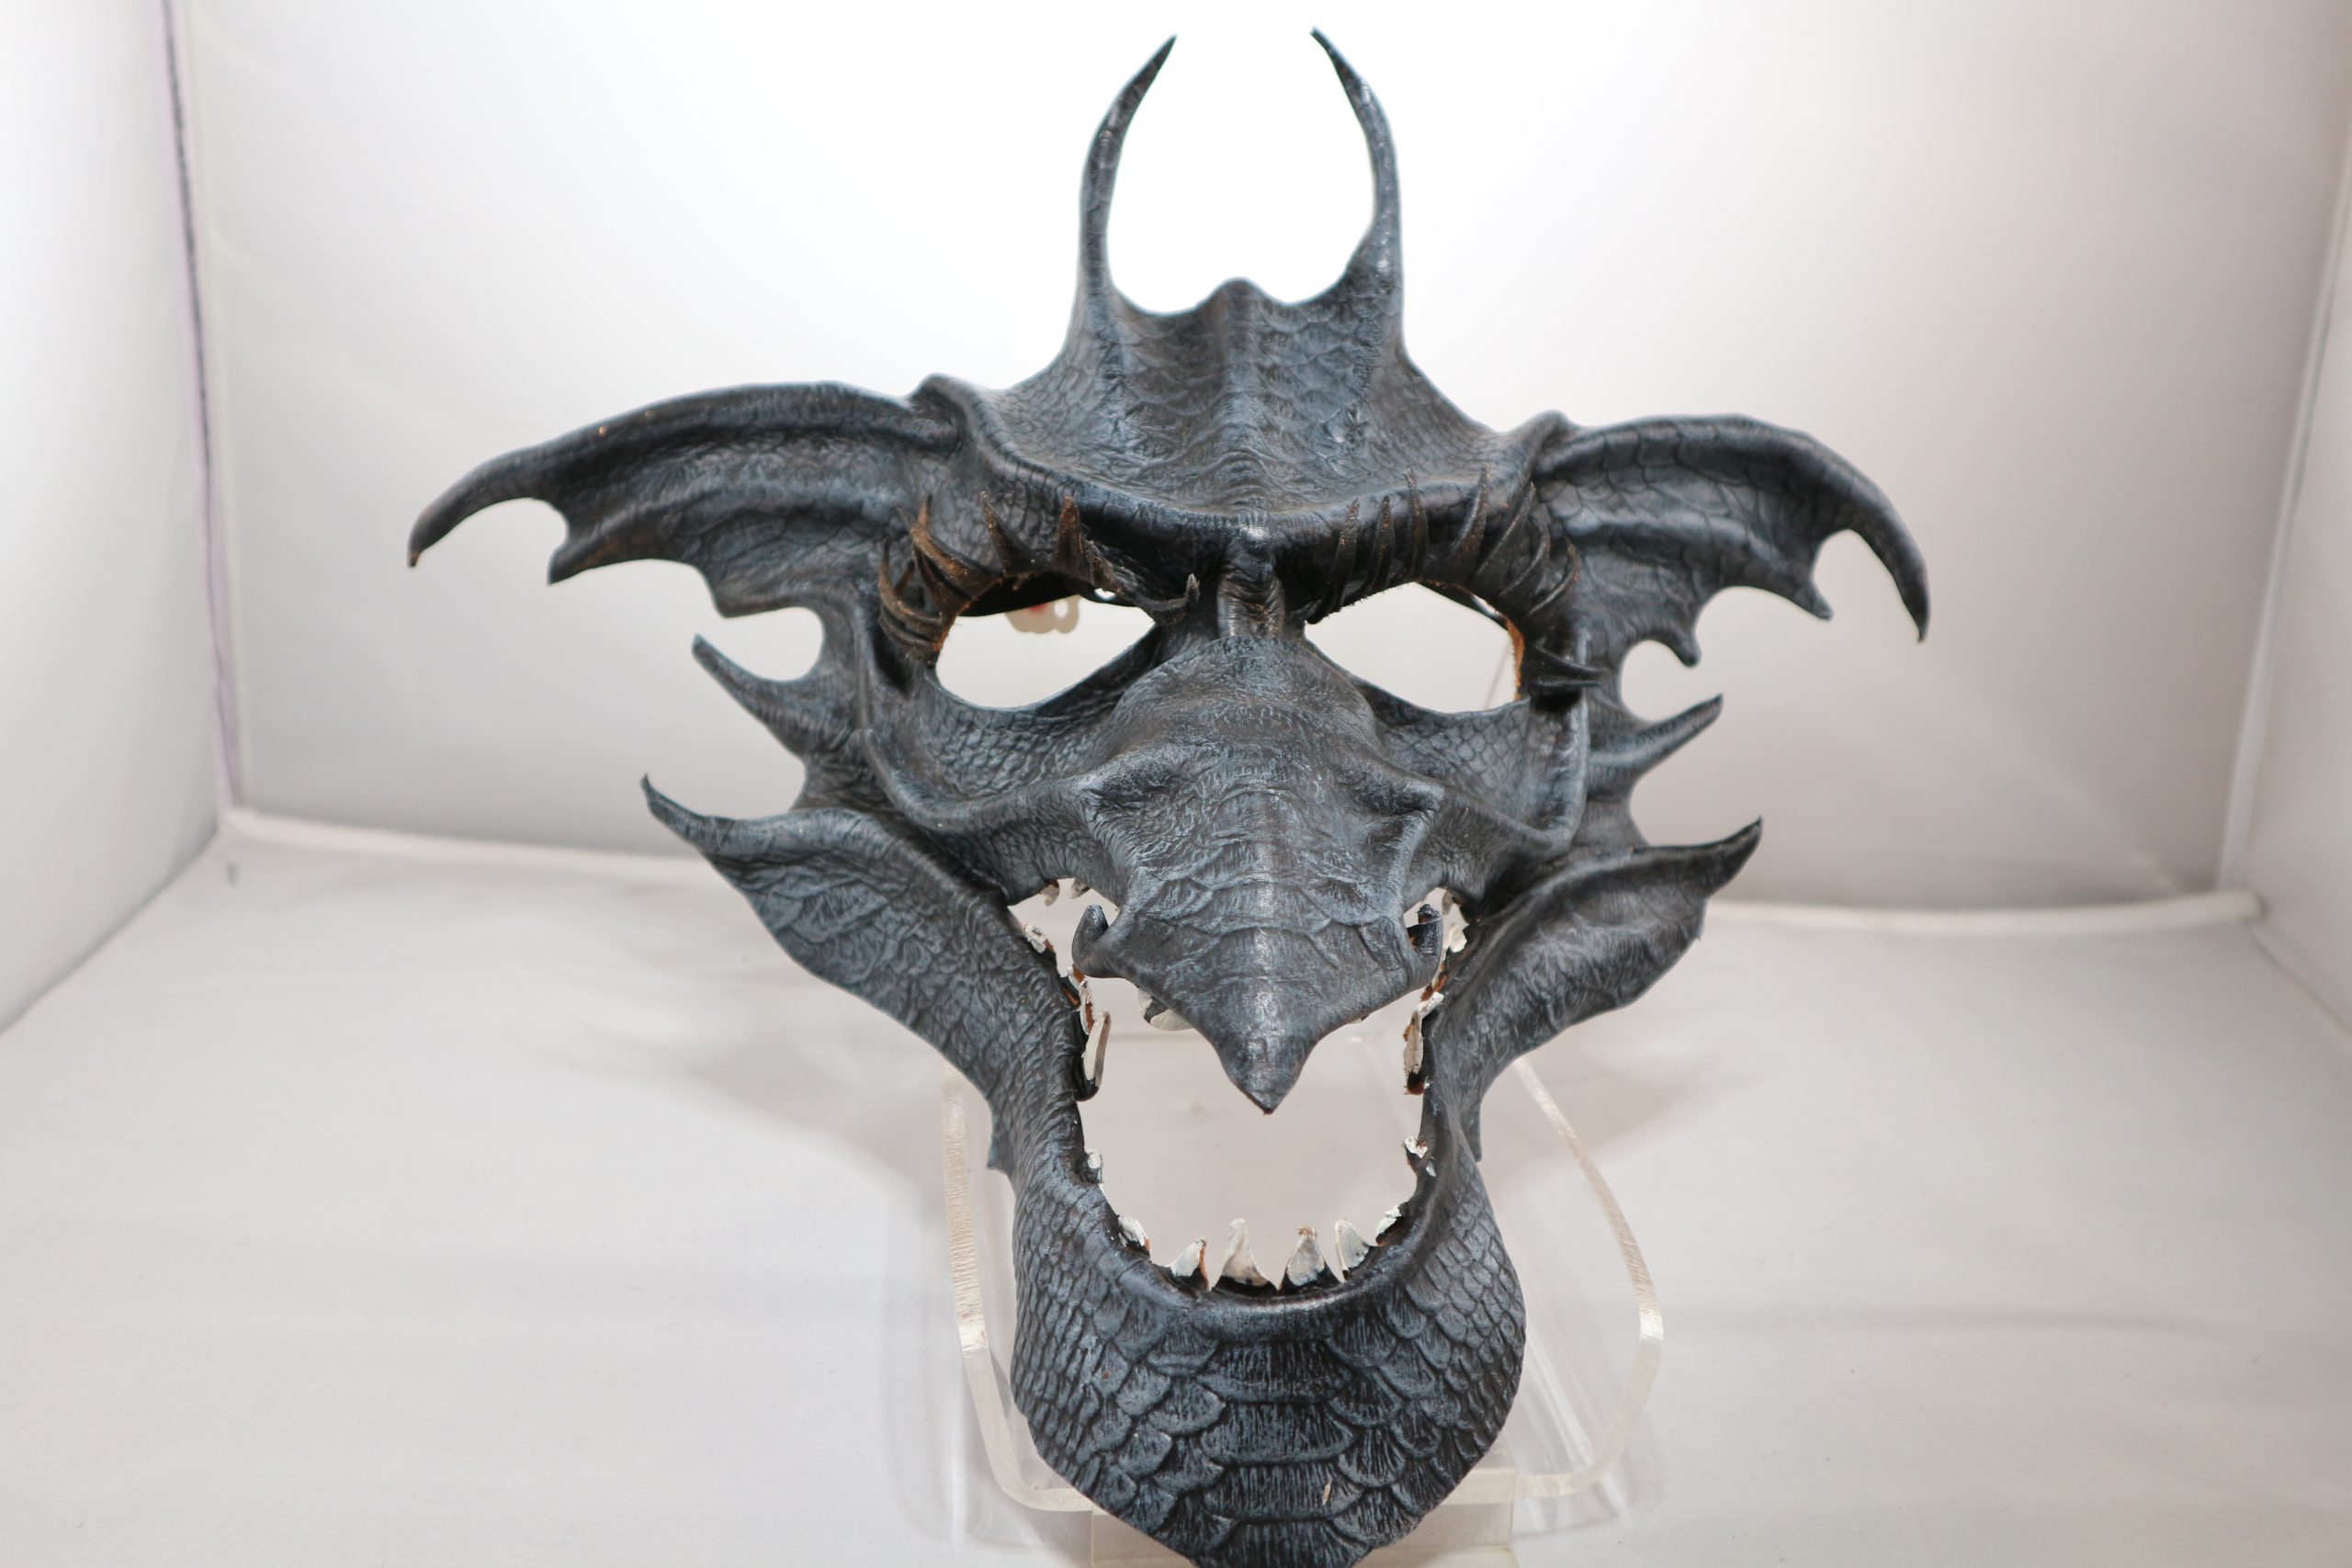 Papier mache mask of a dragon